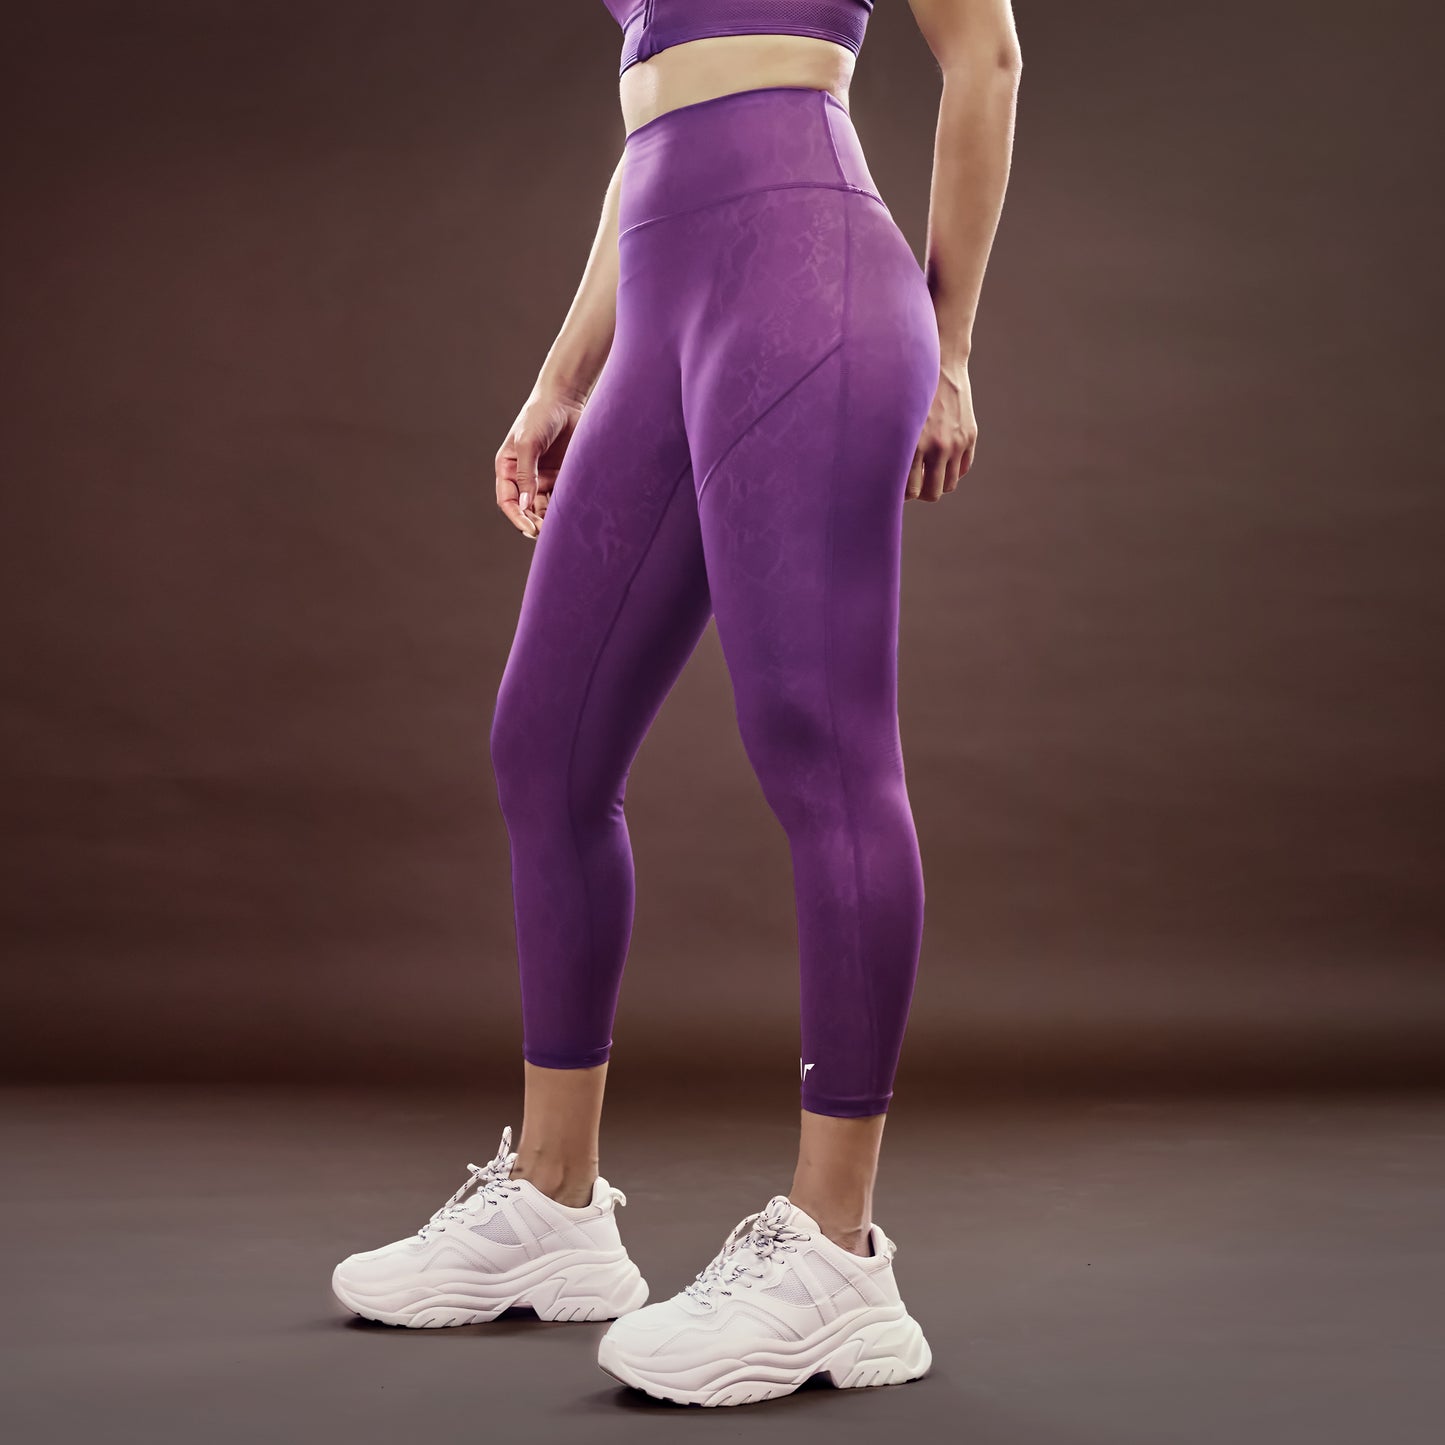 squatwolf-workout-clothes-serpent-7-8-leggings-shadow-purple-gym-leggings-for-women